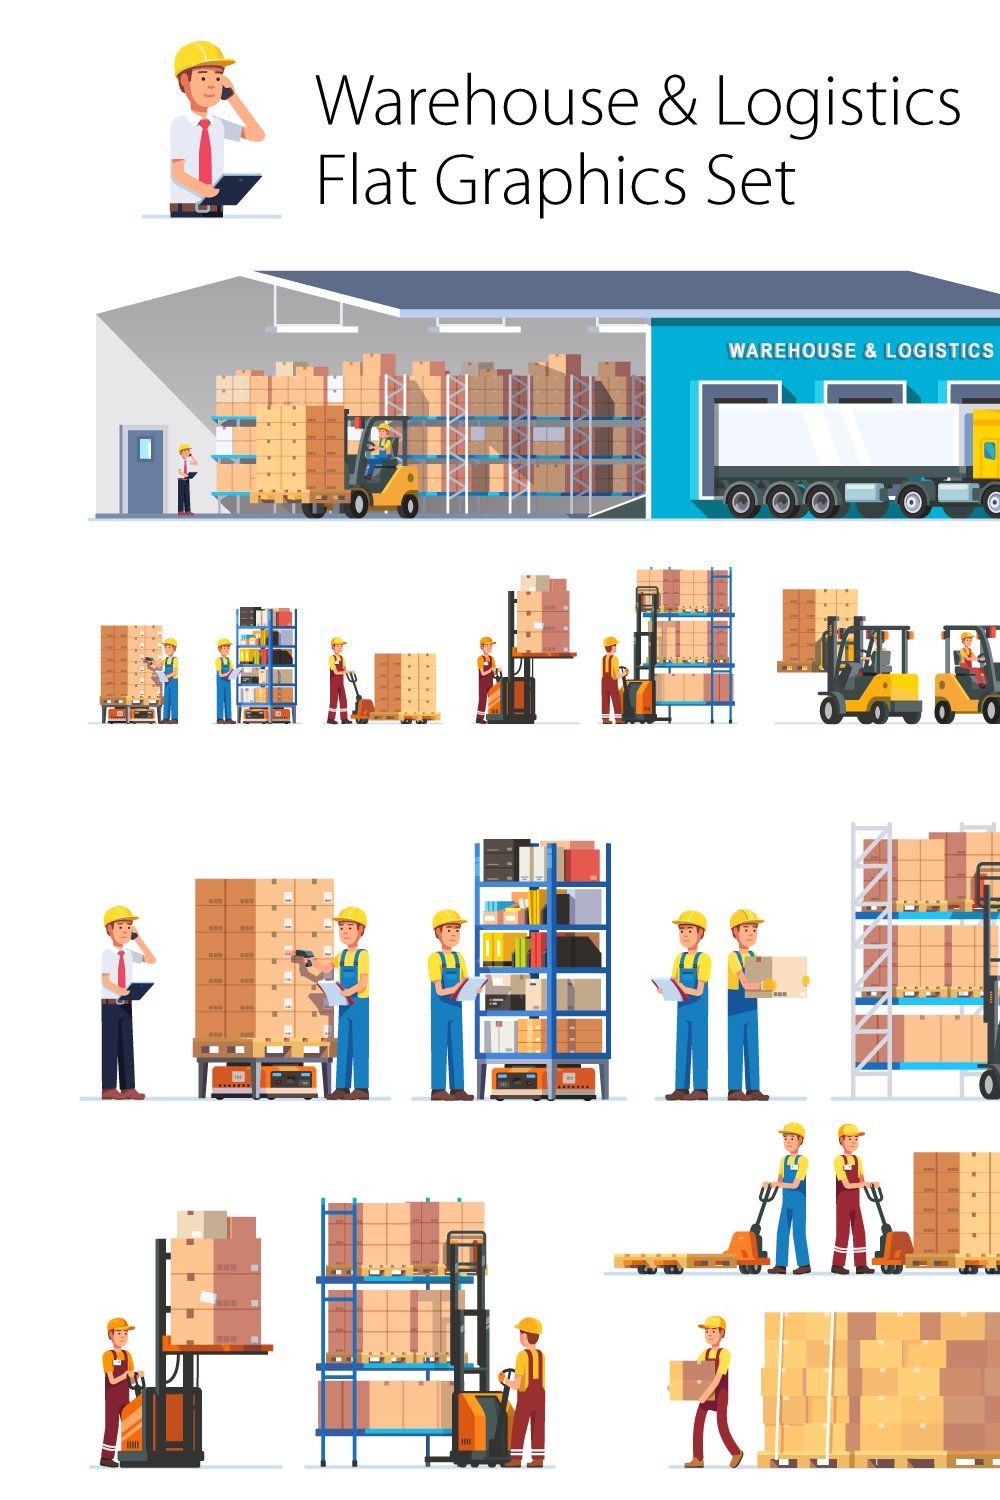 Warehouse & Logistics pinterest preview image.